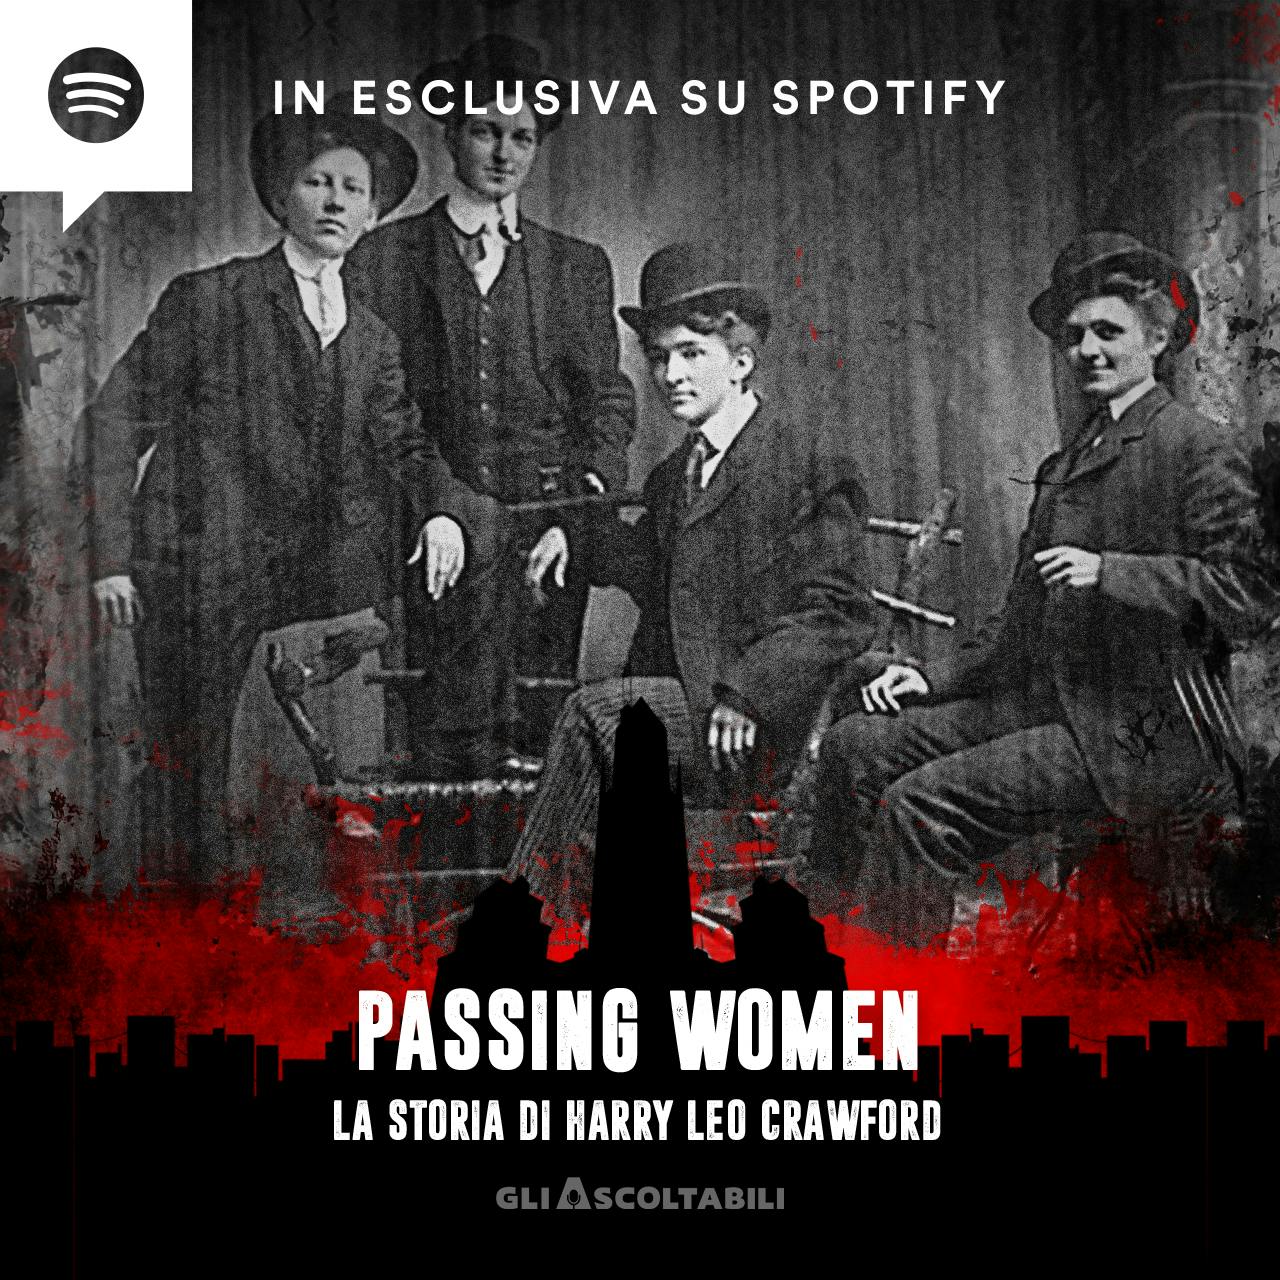 Passing women - La storia di Harry Leo Crawford